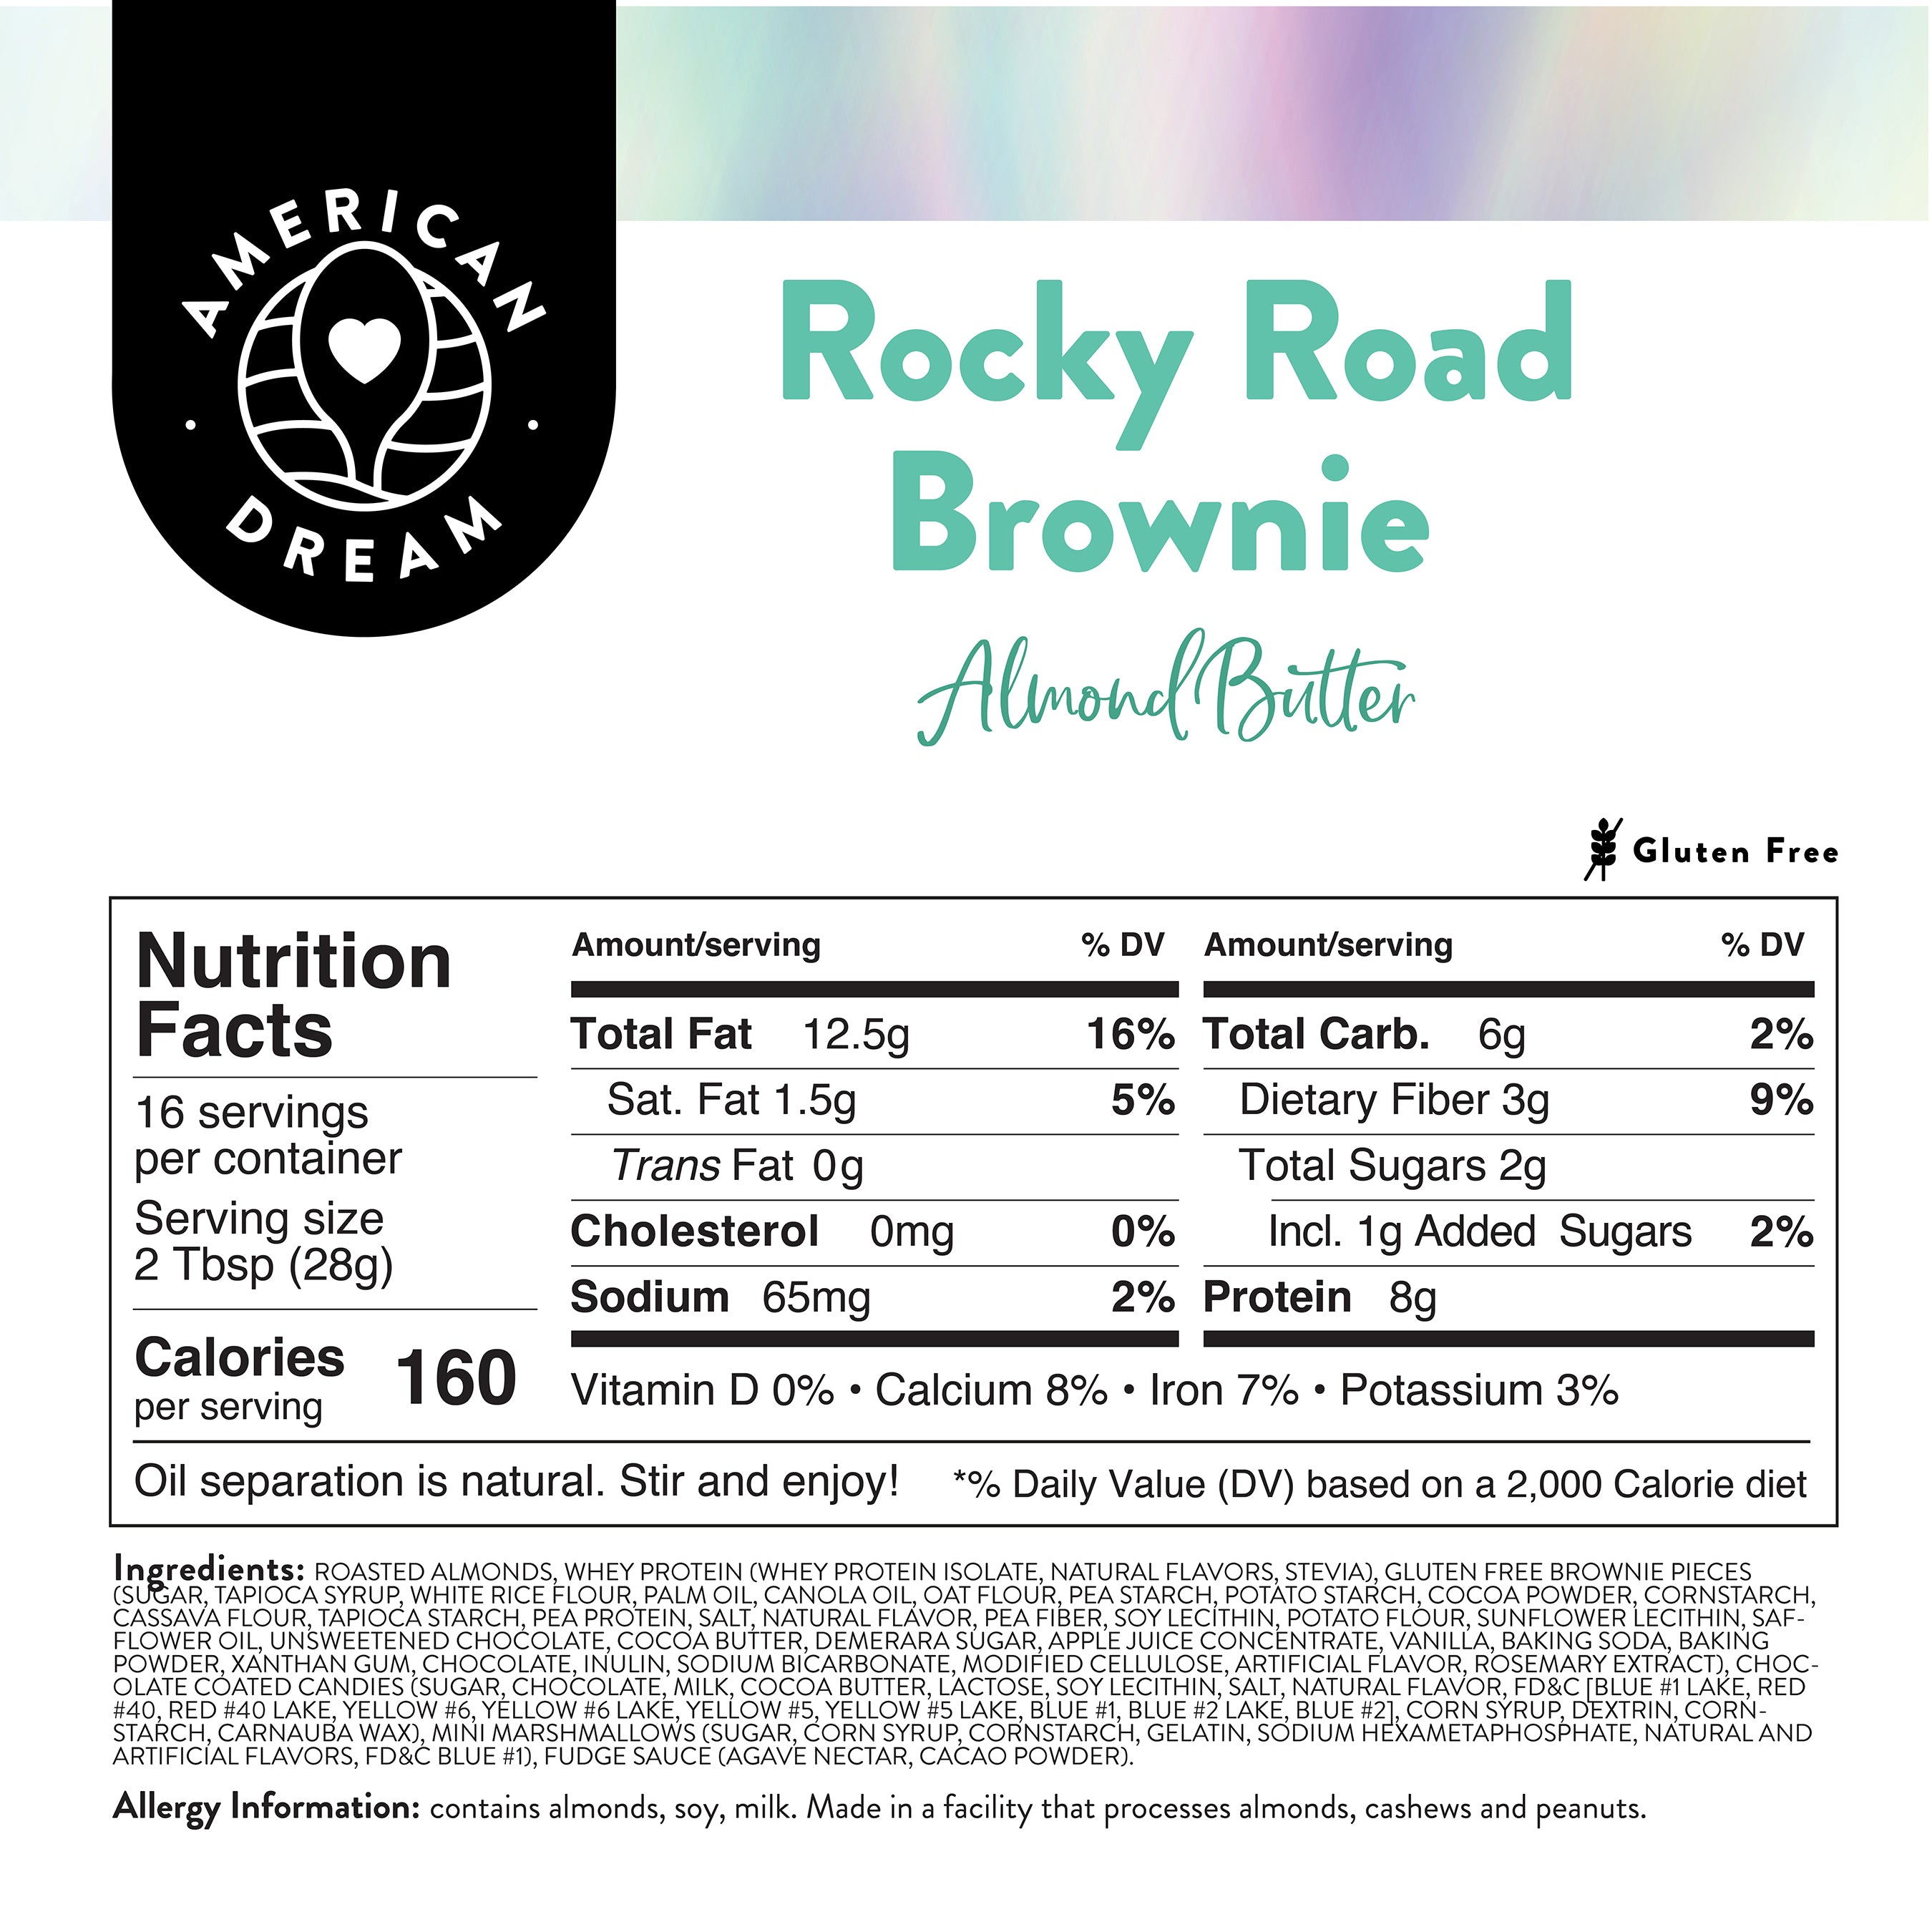 Gluten-Free Rocky Road Brownie Almond Butter